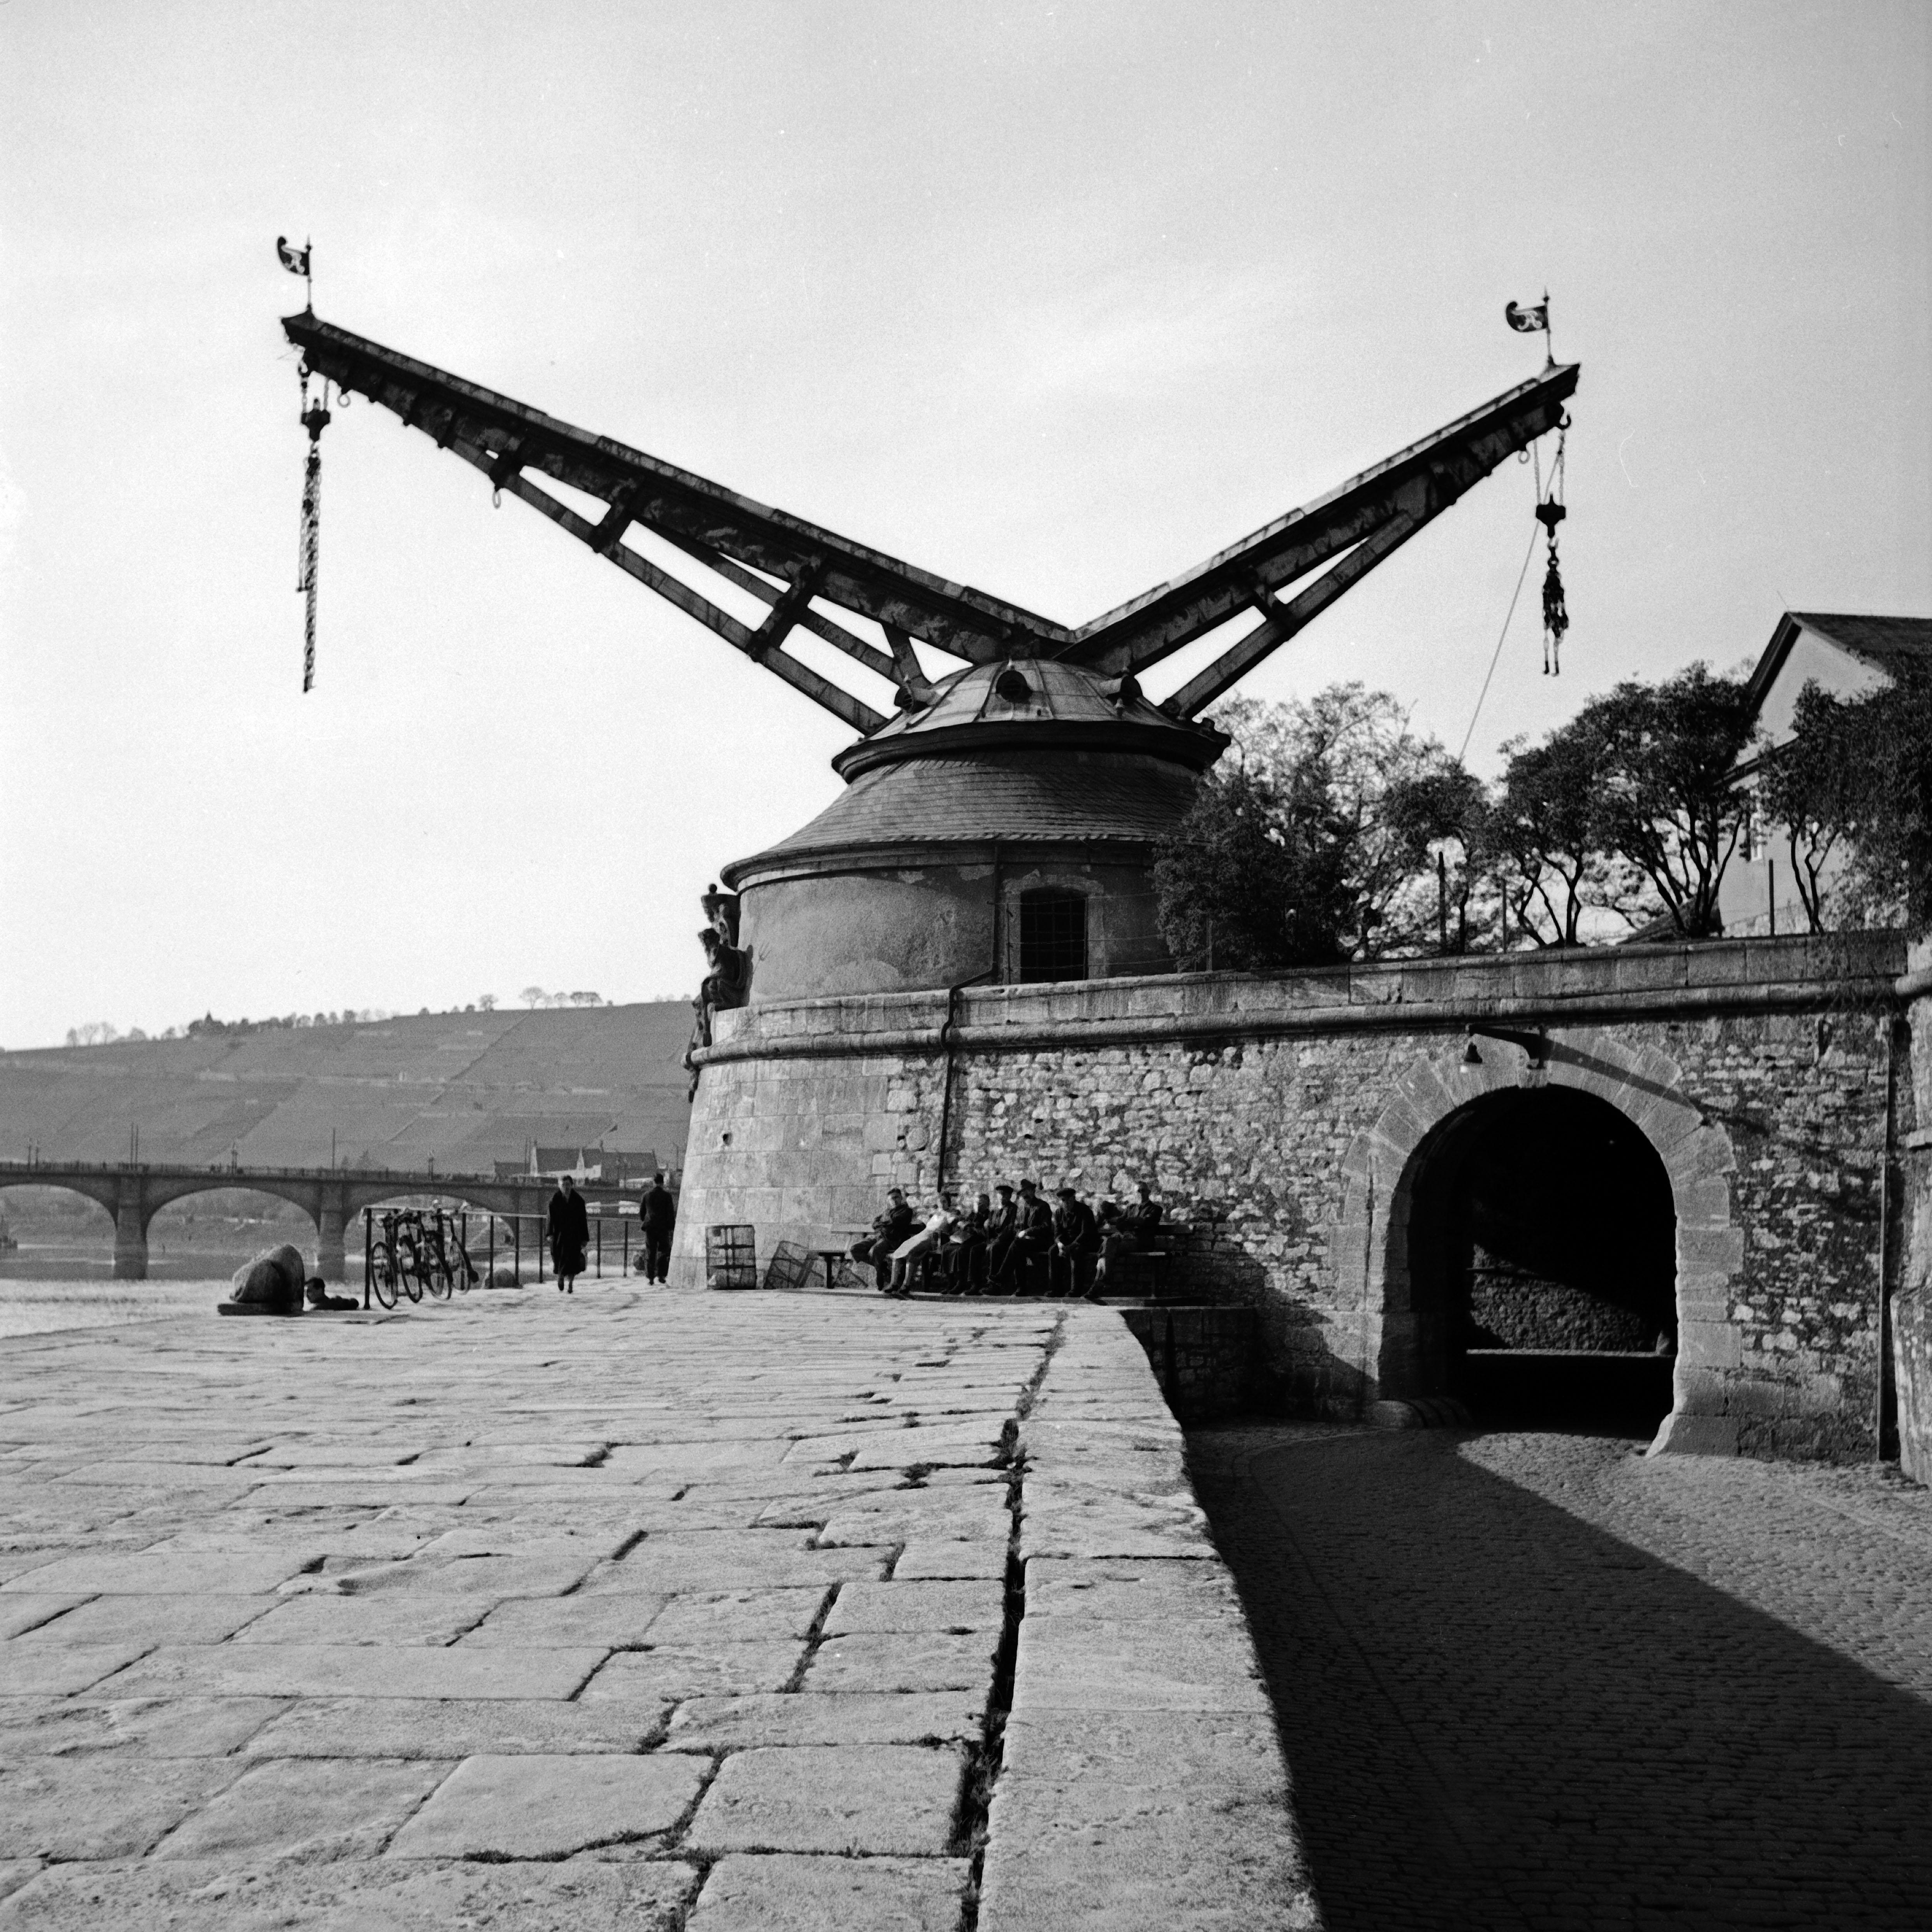 Karl Heinrich Lämmel Black and White Photograph - Würzburg, Germany 1935, Printed Later